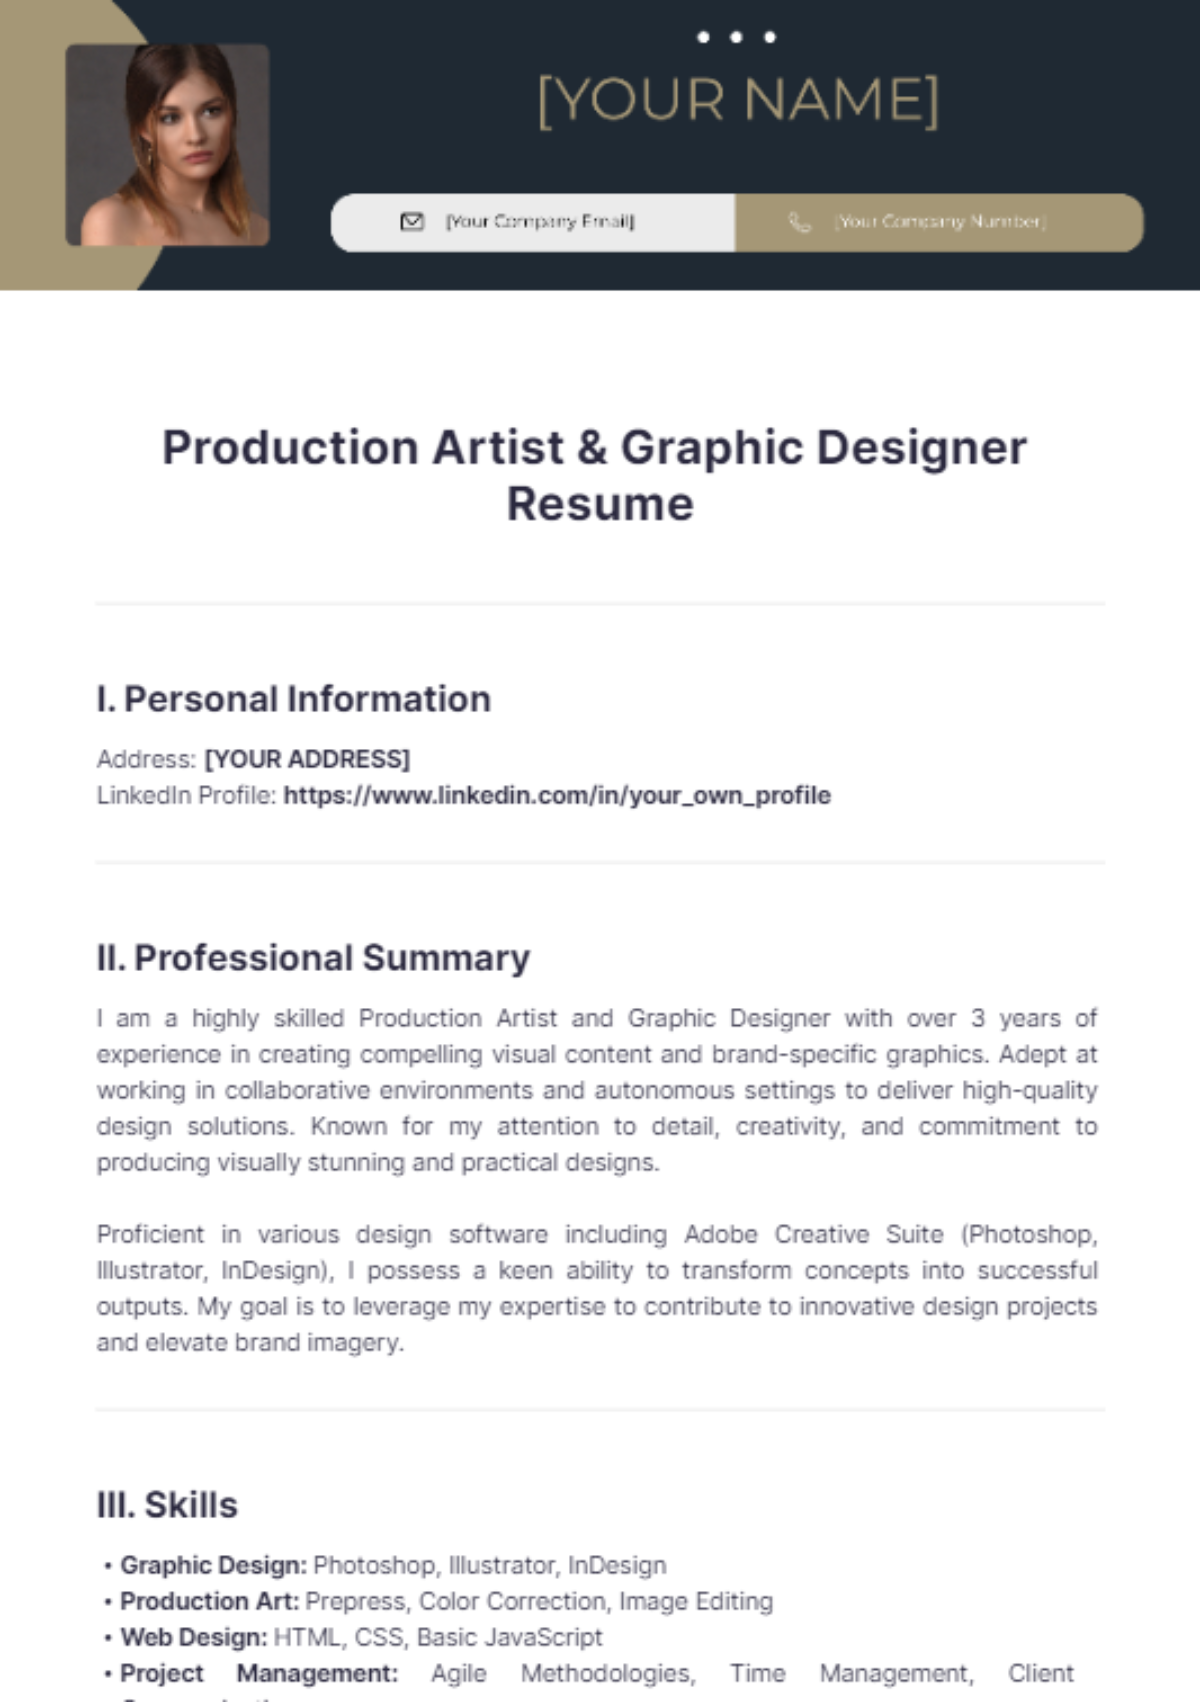 Free Production Artist & Graphic Designer Resume